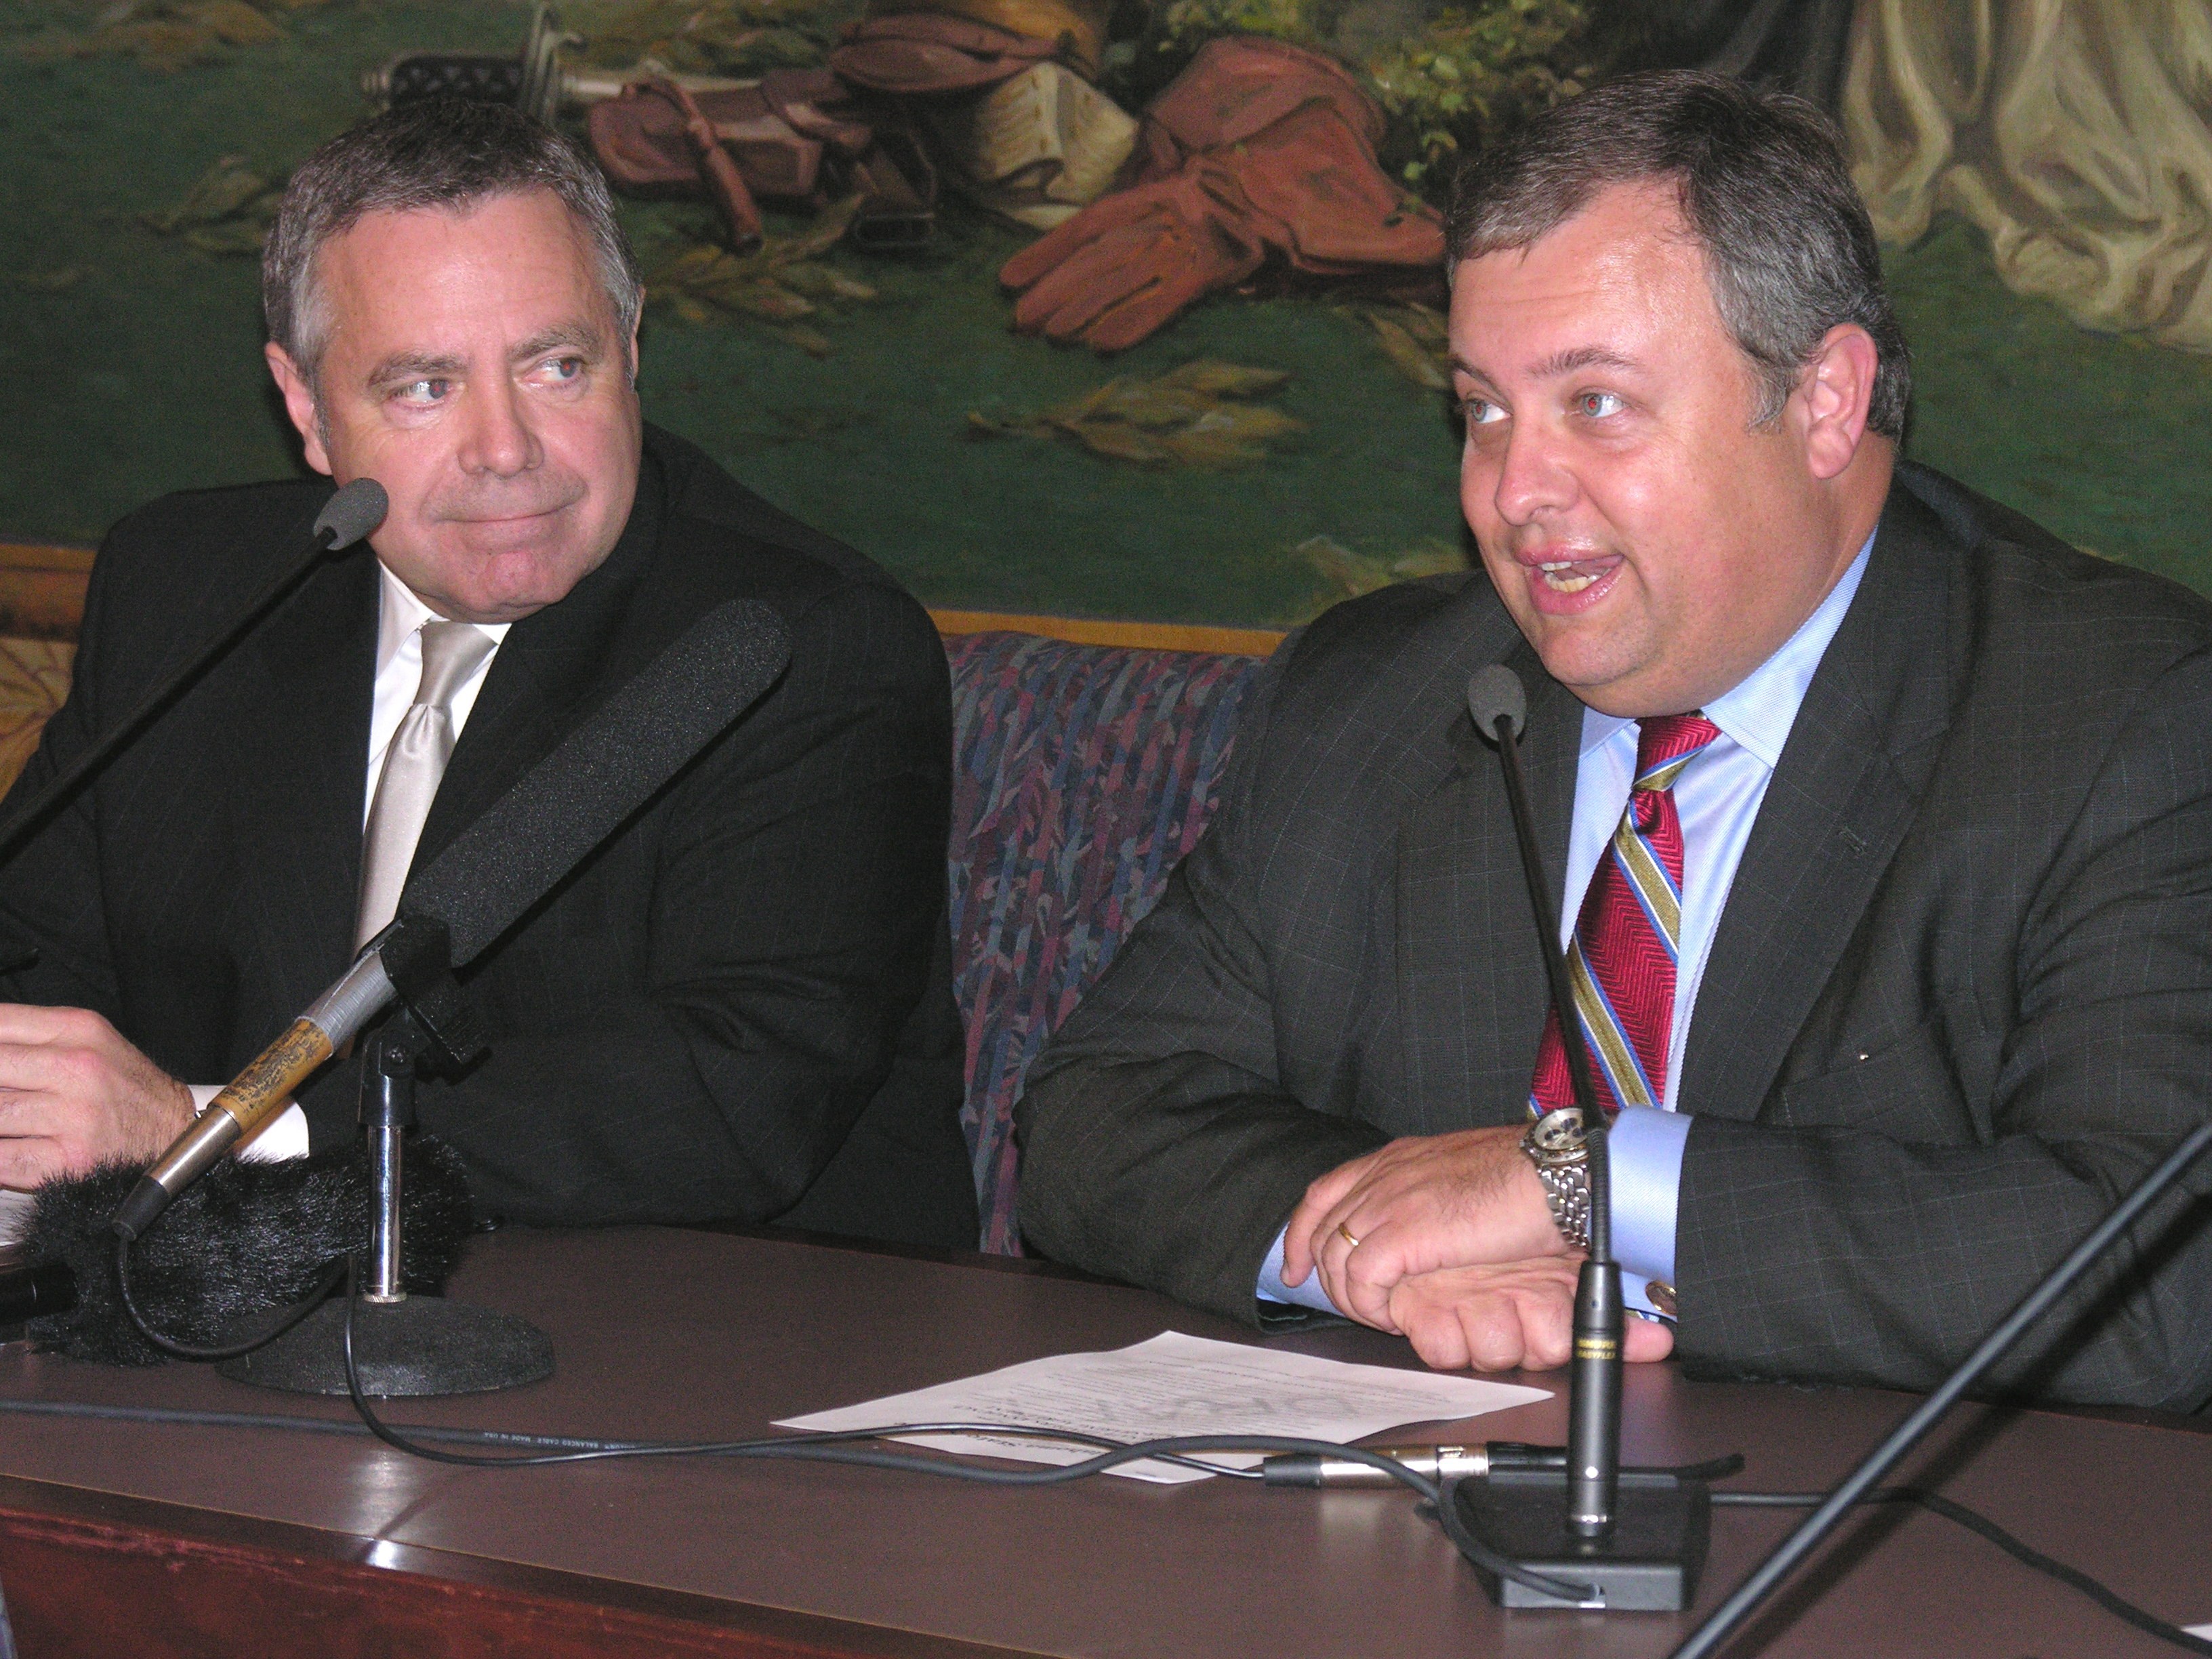 Senator Morgan and Senator Coffee speak with the press about power sharing-agreement